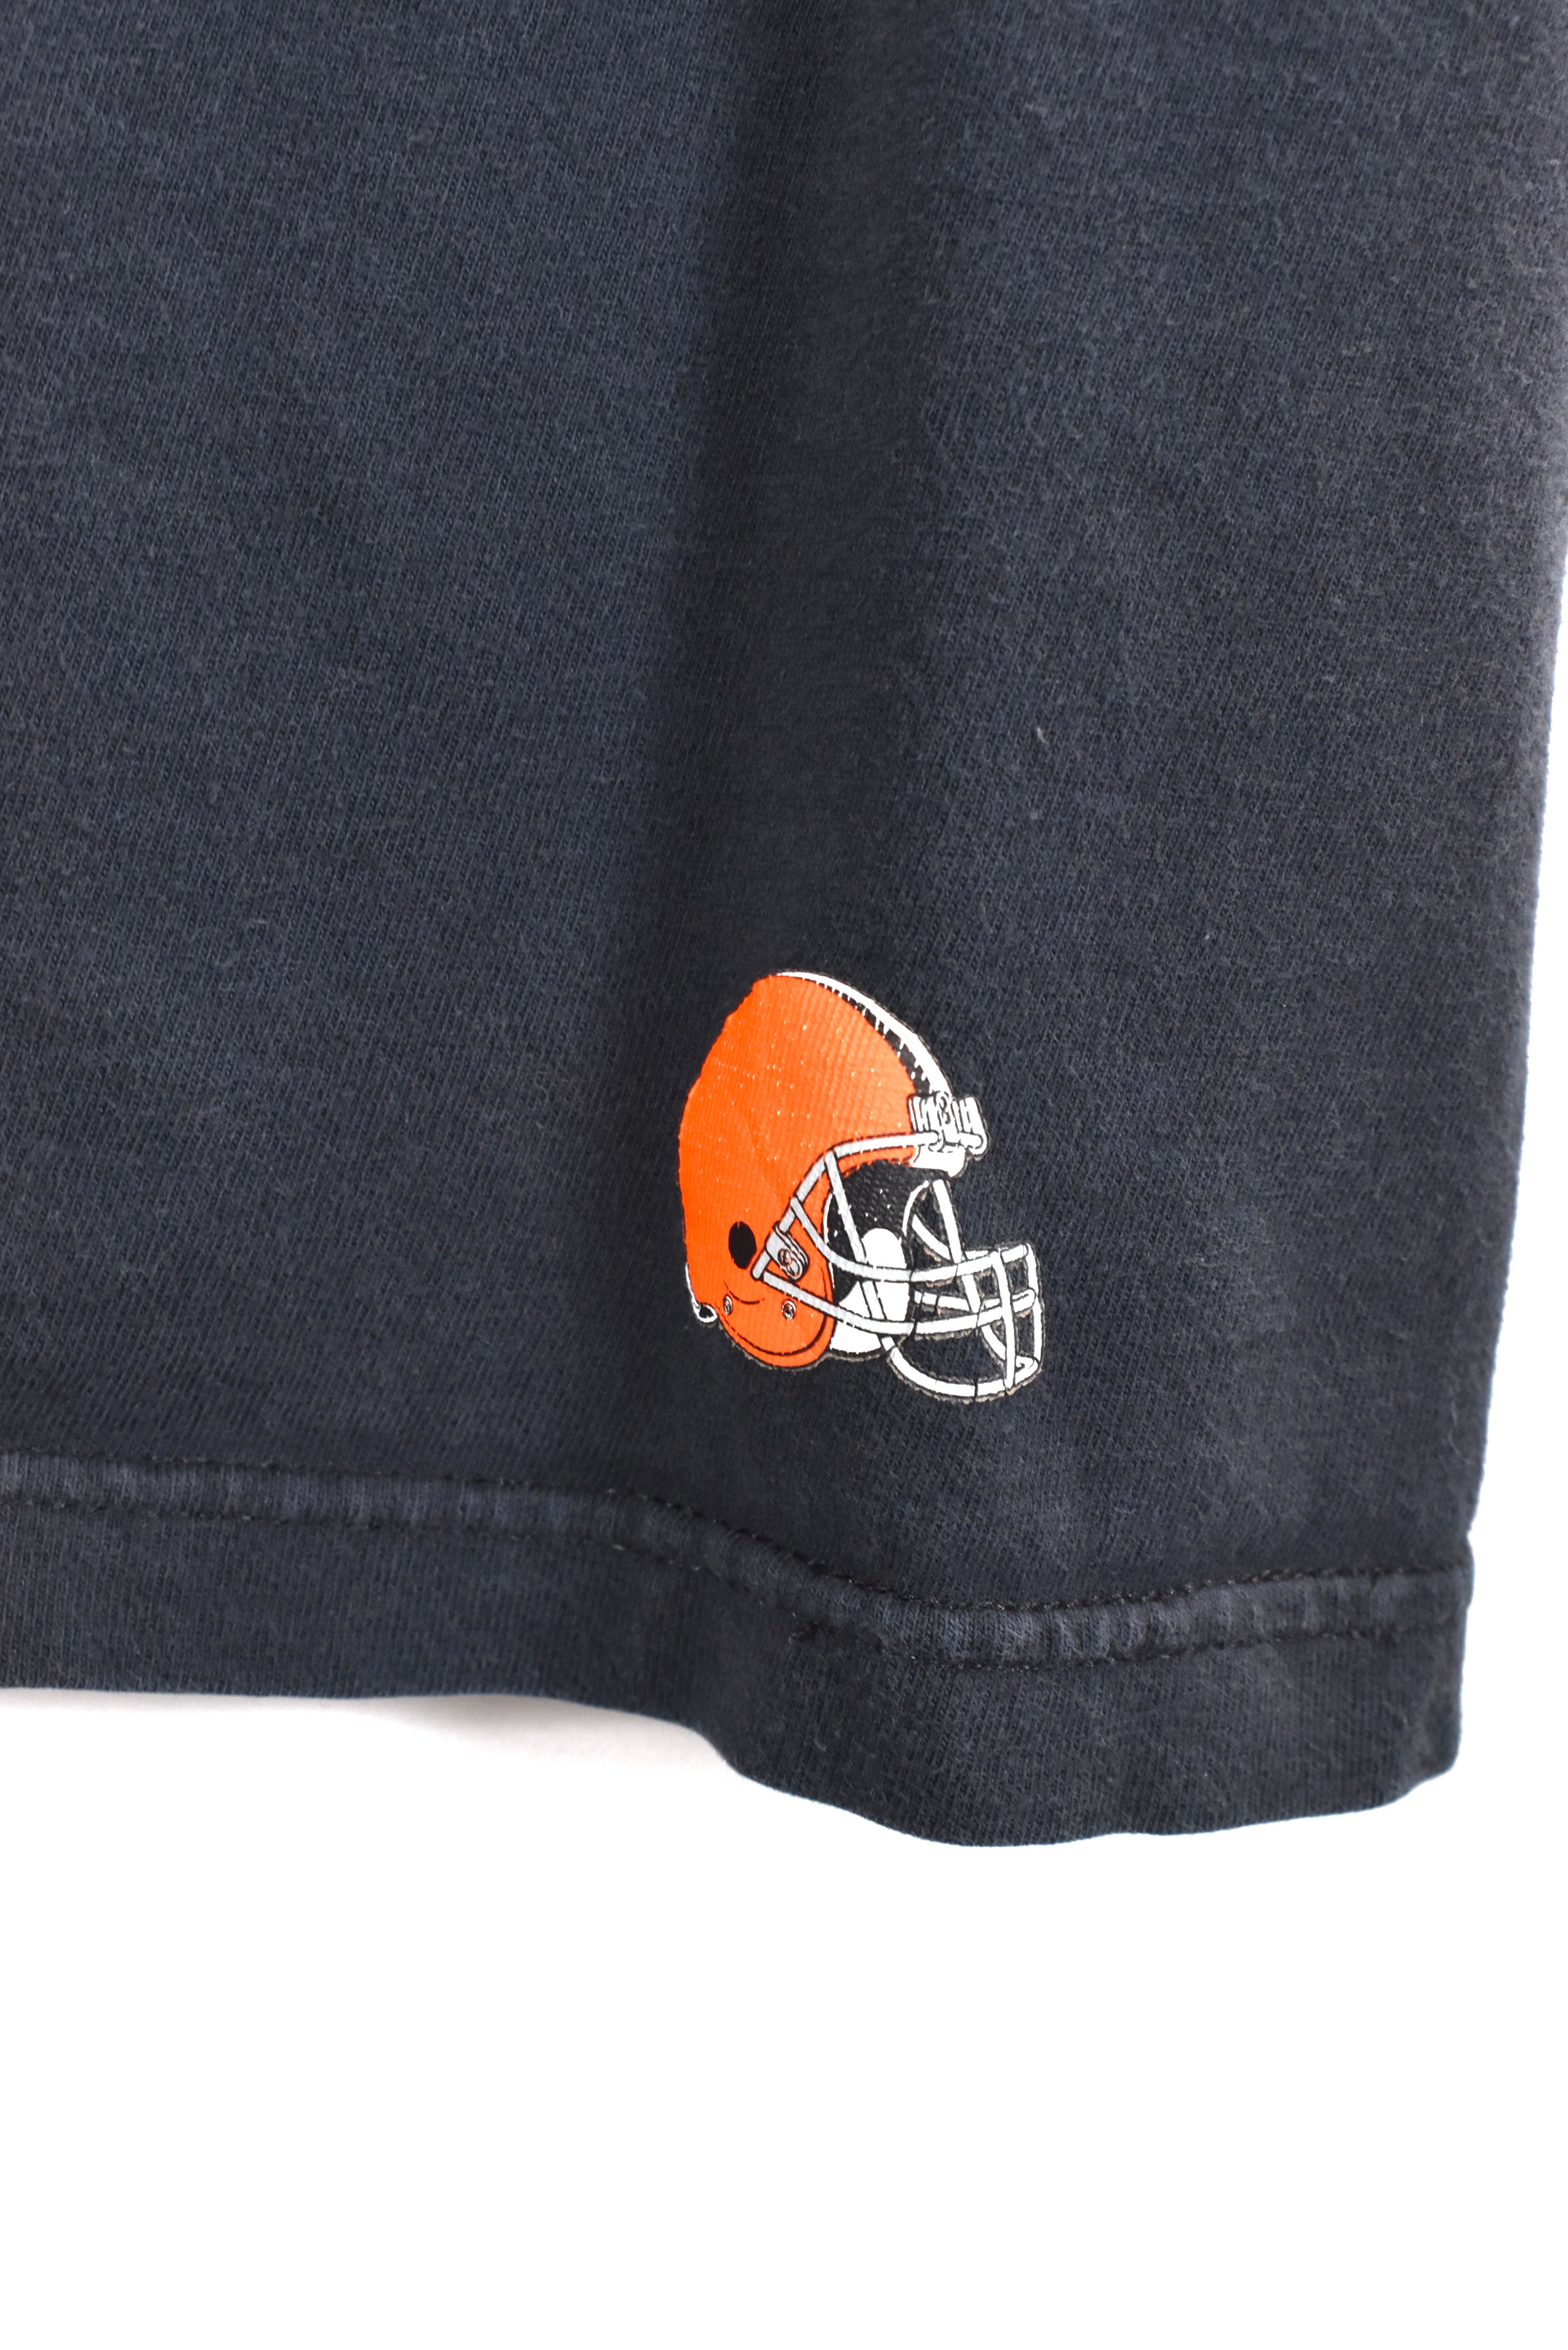 Vintage Chicago Bears shirt, NFL black graphic tee - AU Medium PRO SPORT